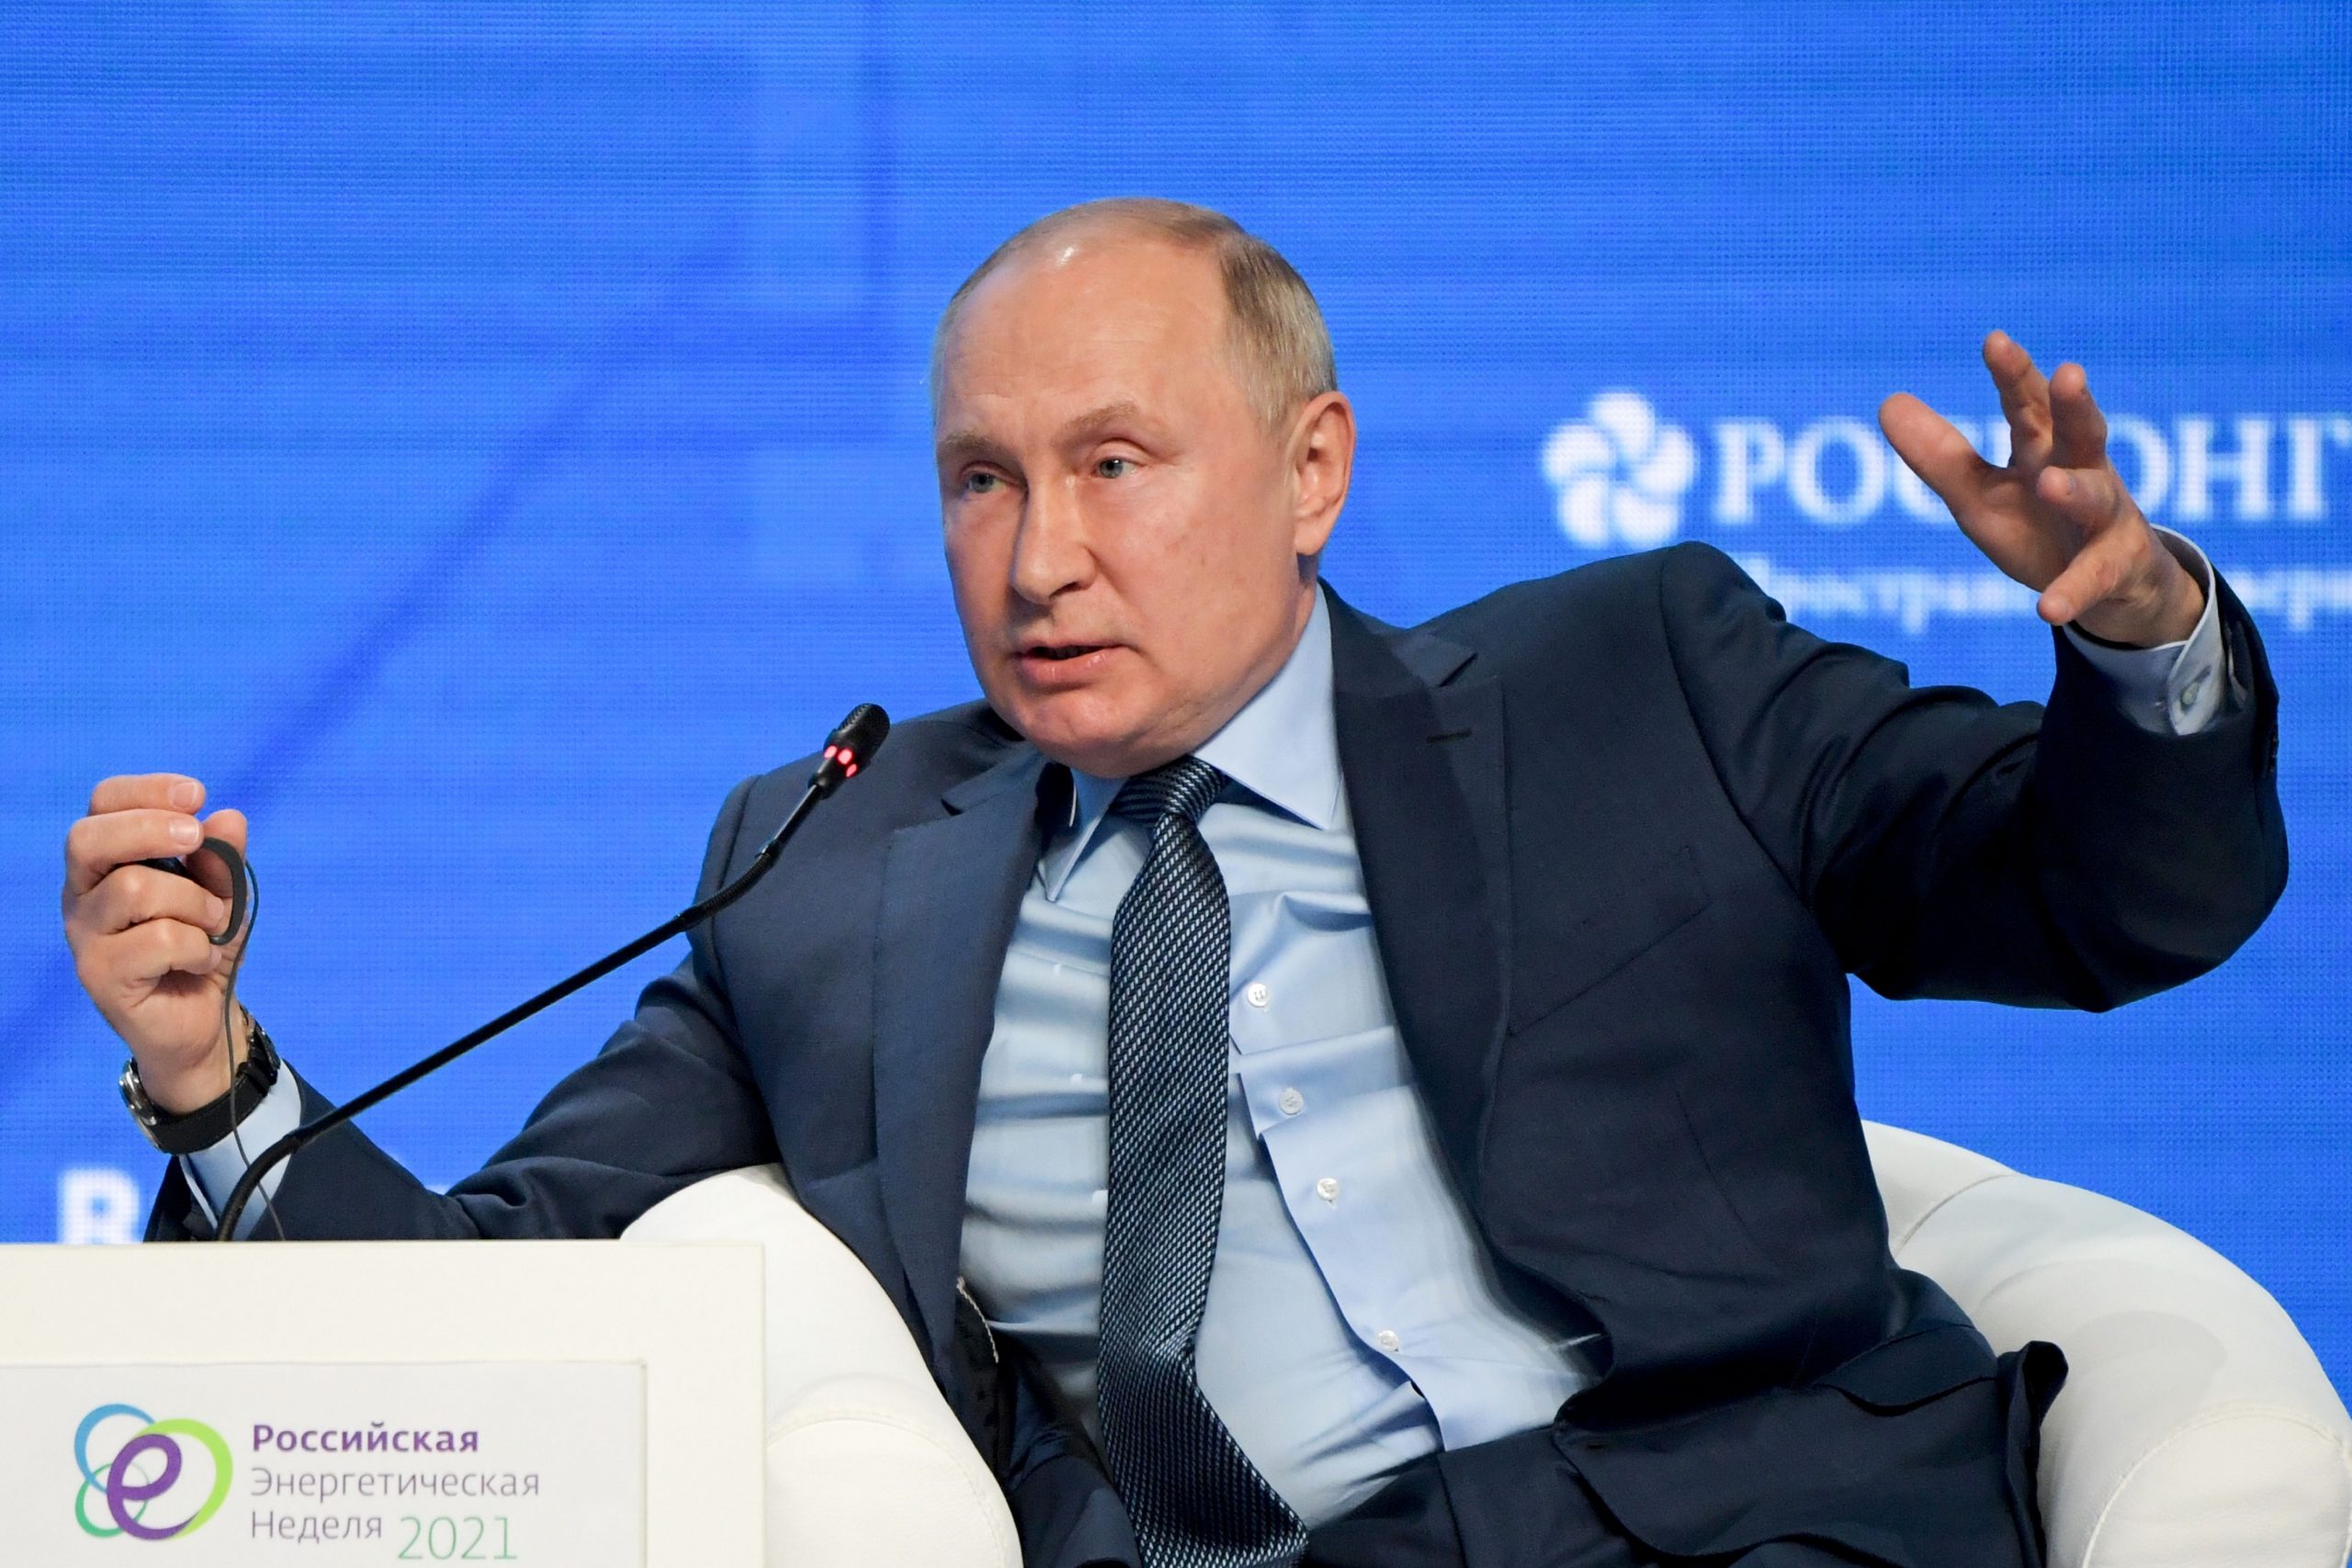 Russian President Vladimir Putin set to snub COP26 climate summit